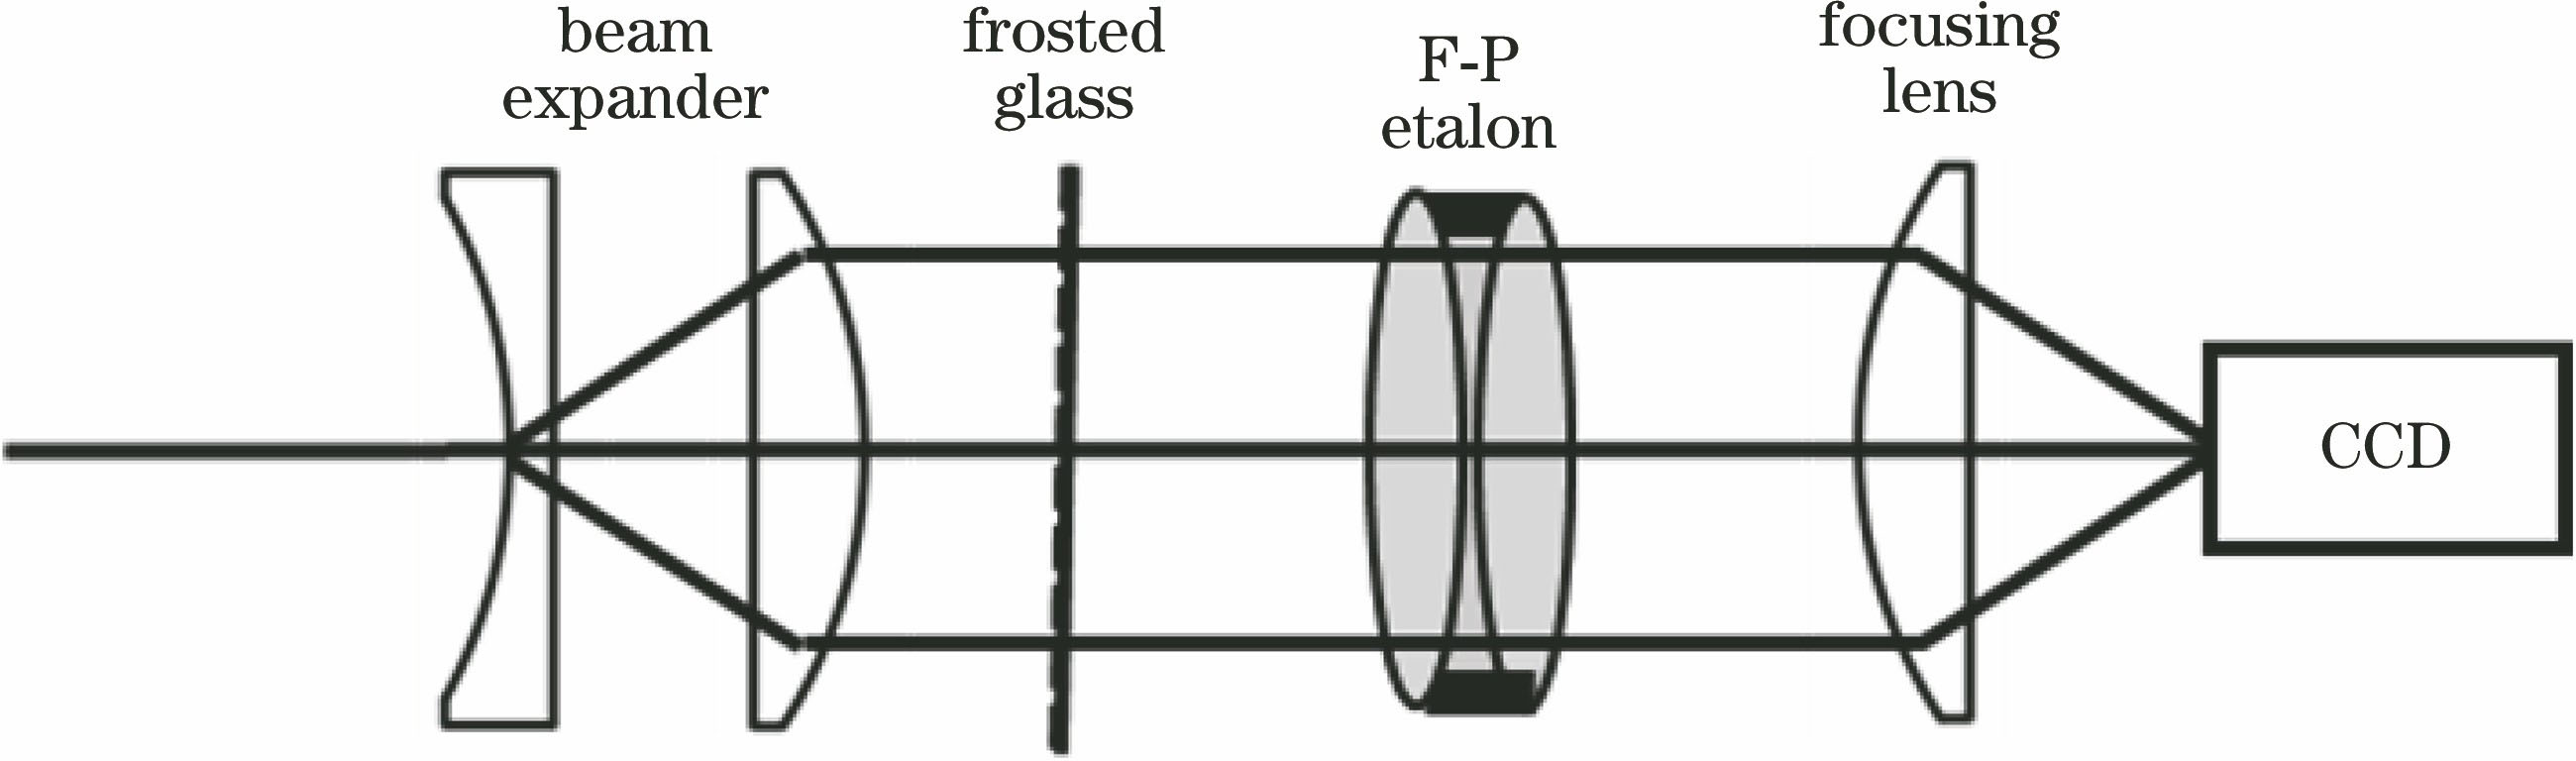 Experiment schematic of F-P etalon photographing method